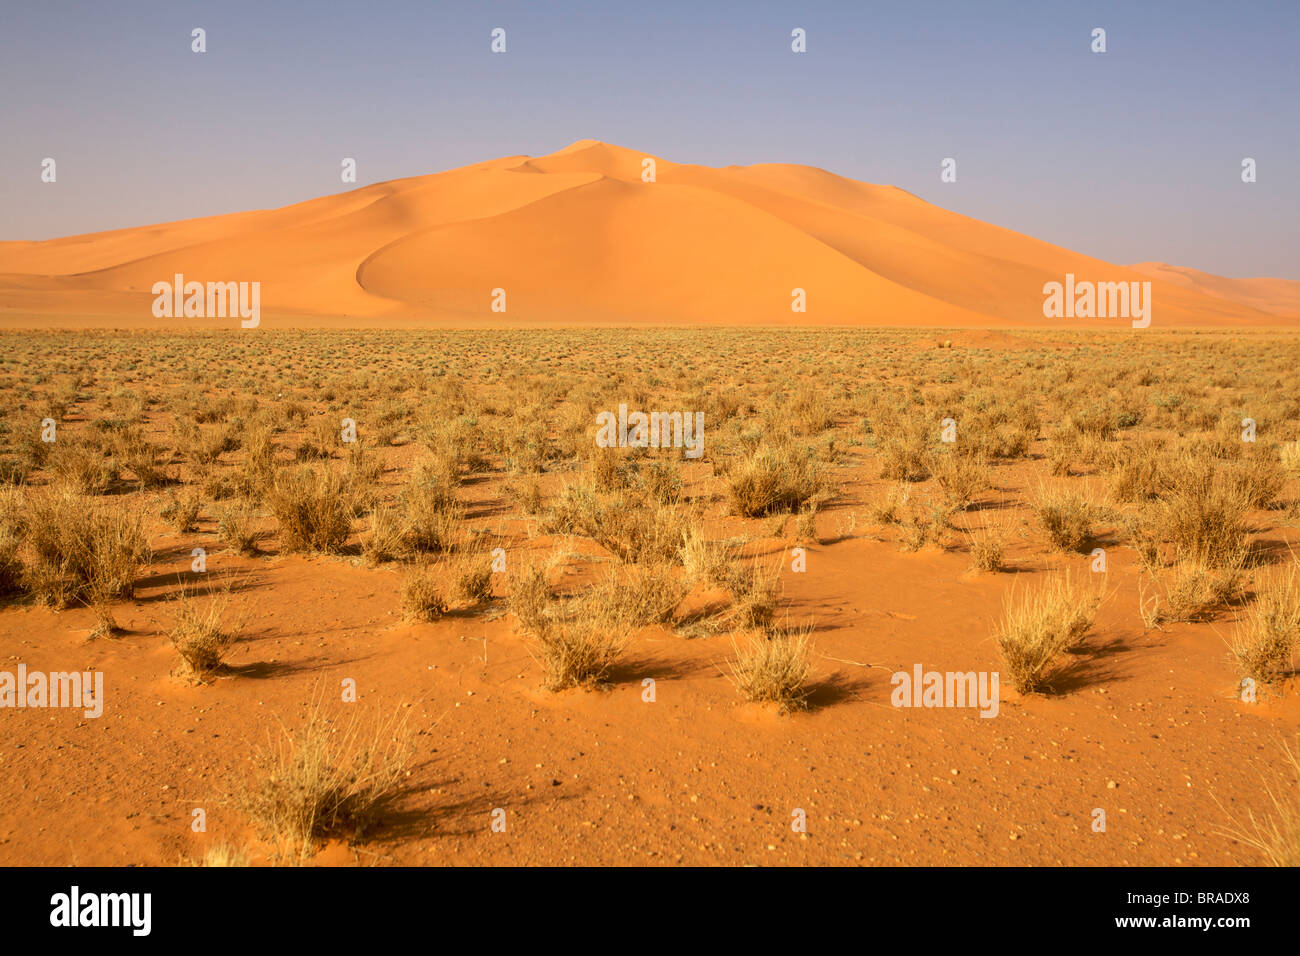 On the dunes of the erg of Murzuk in the Fezzan desert, Libya, North Africa, Africa Stock Photo